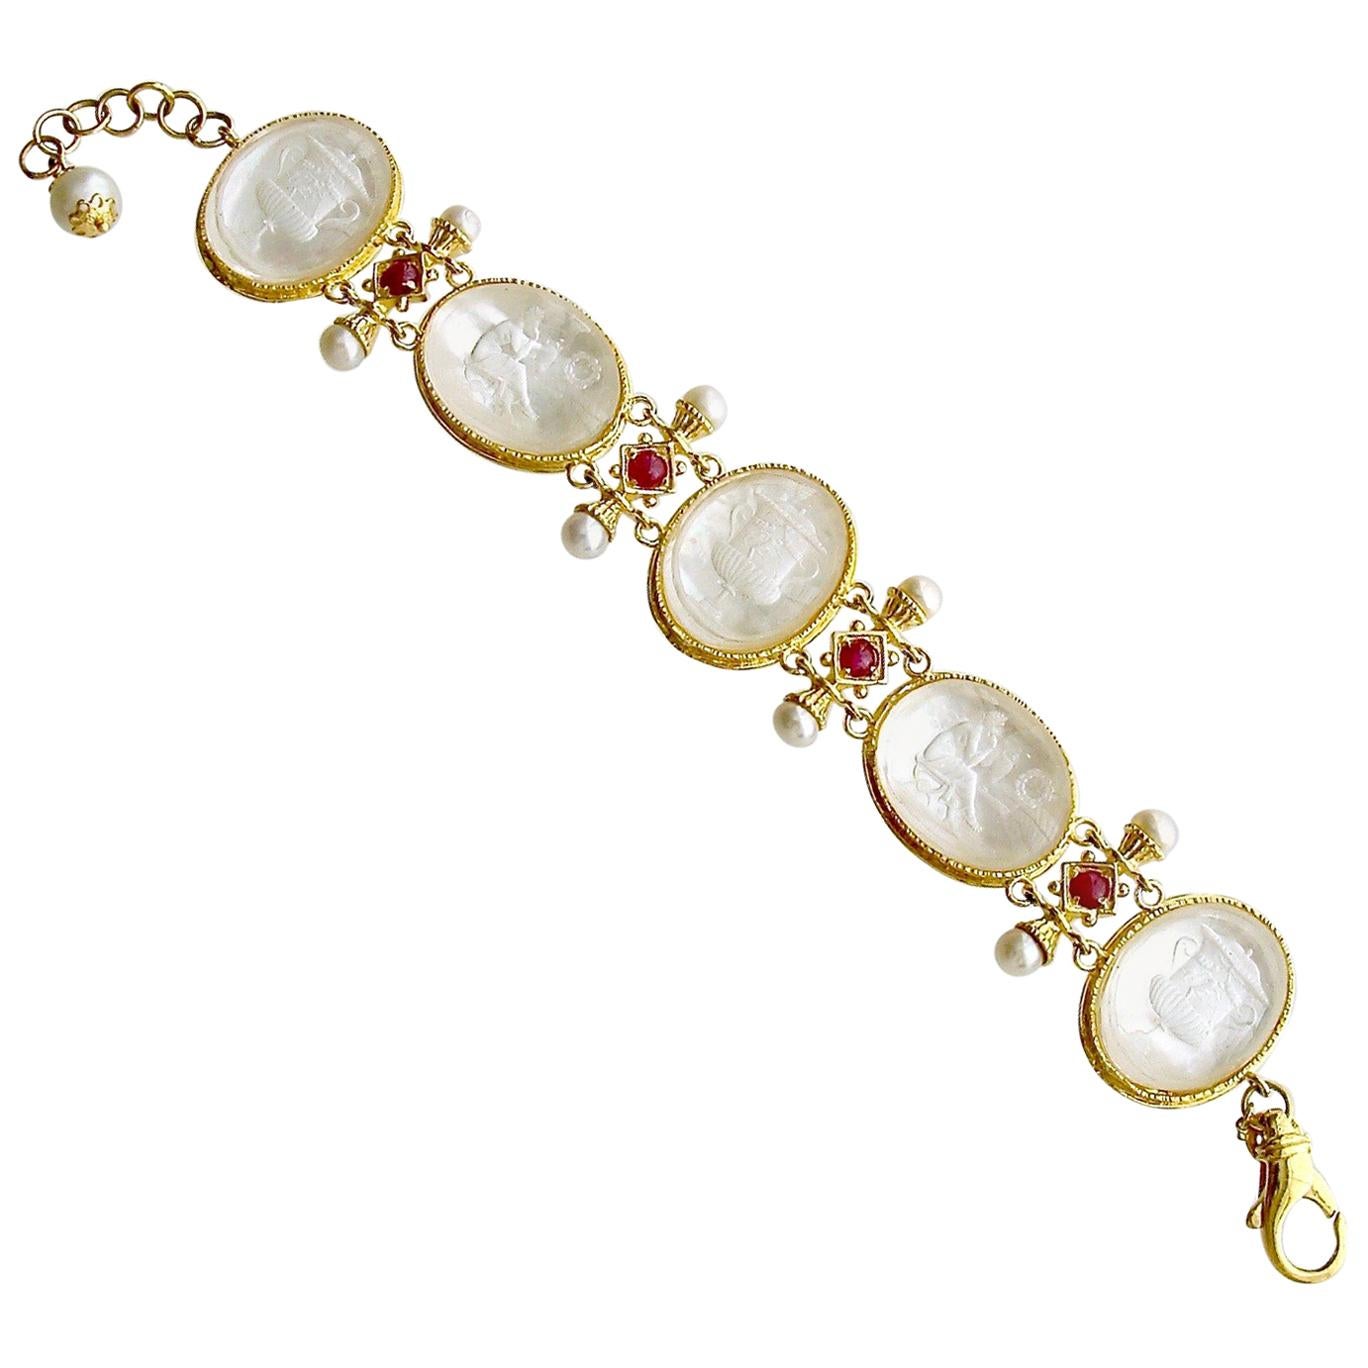 White Venetian Glass Intaglios Pearls Rubies Mop Bracelet, Varenna Bracelet